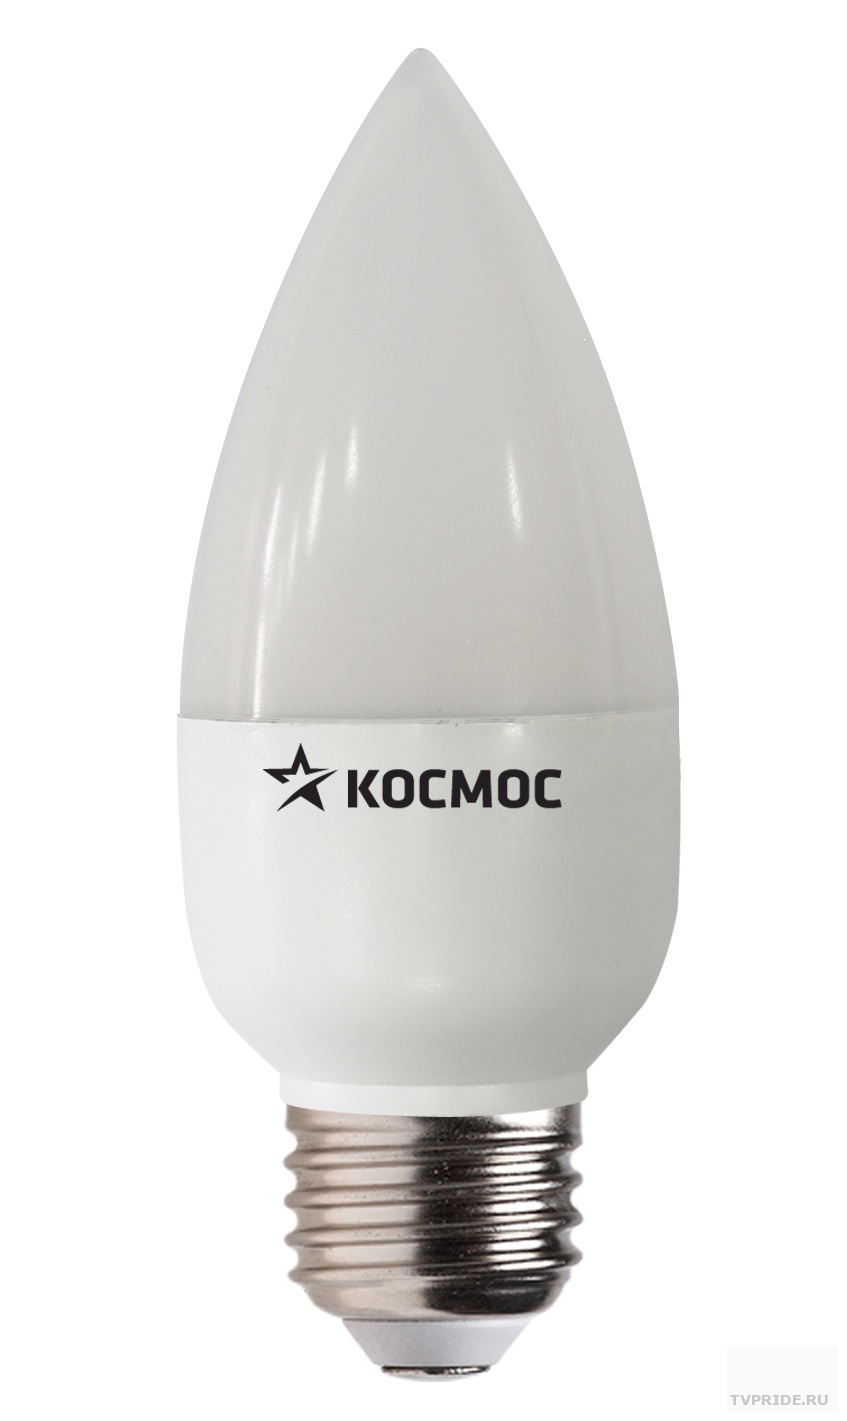 Лампа KOCMOC 7W LED CN E2745